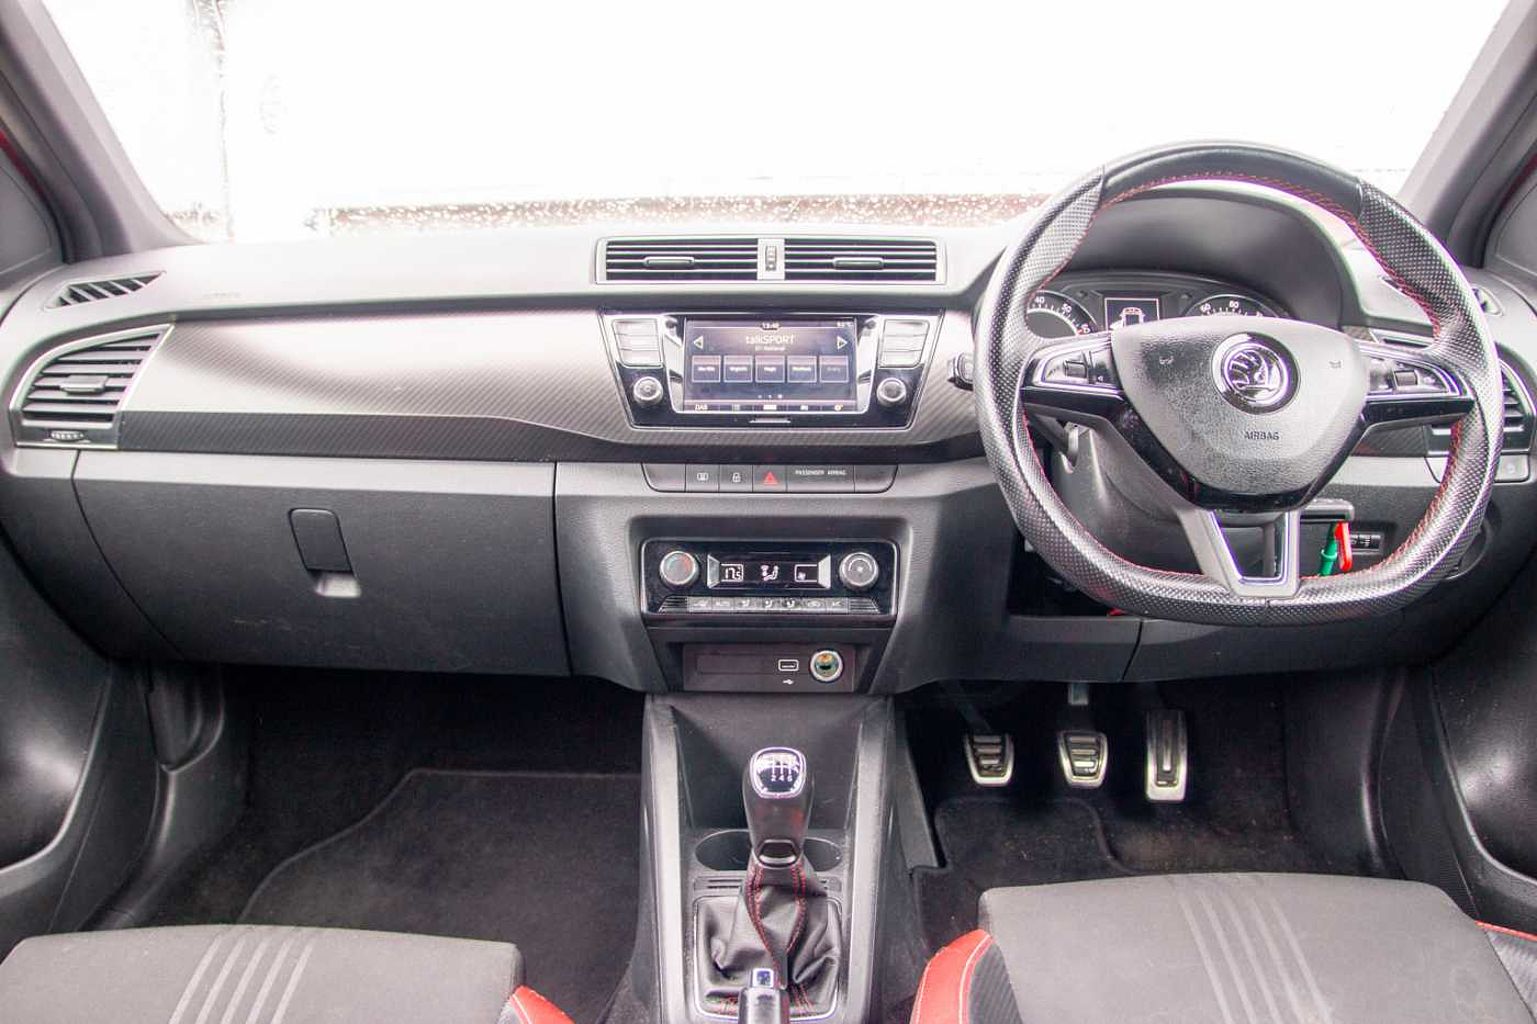 SKODA Fabia 1.0 TSI Monte Carlo (110PS) SS 5Dr Hatchback